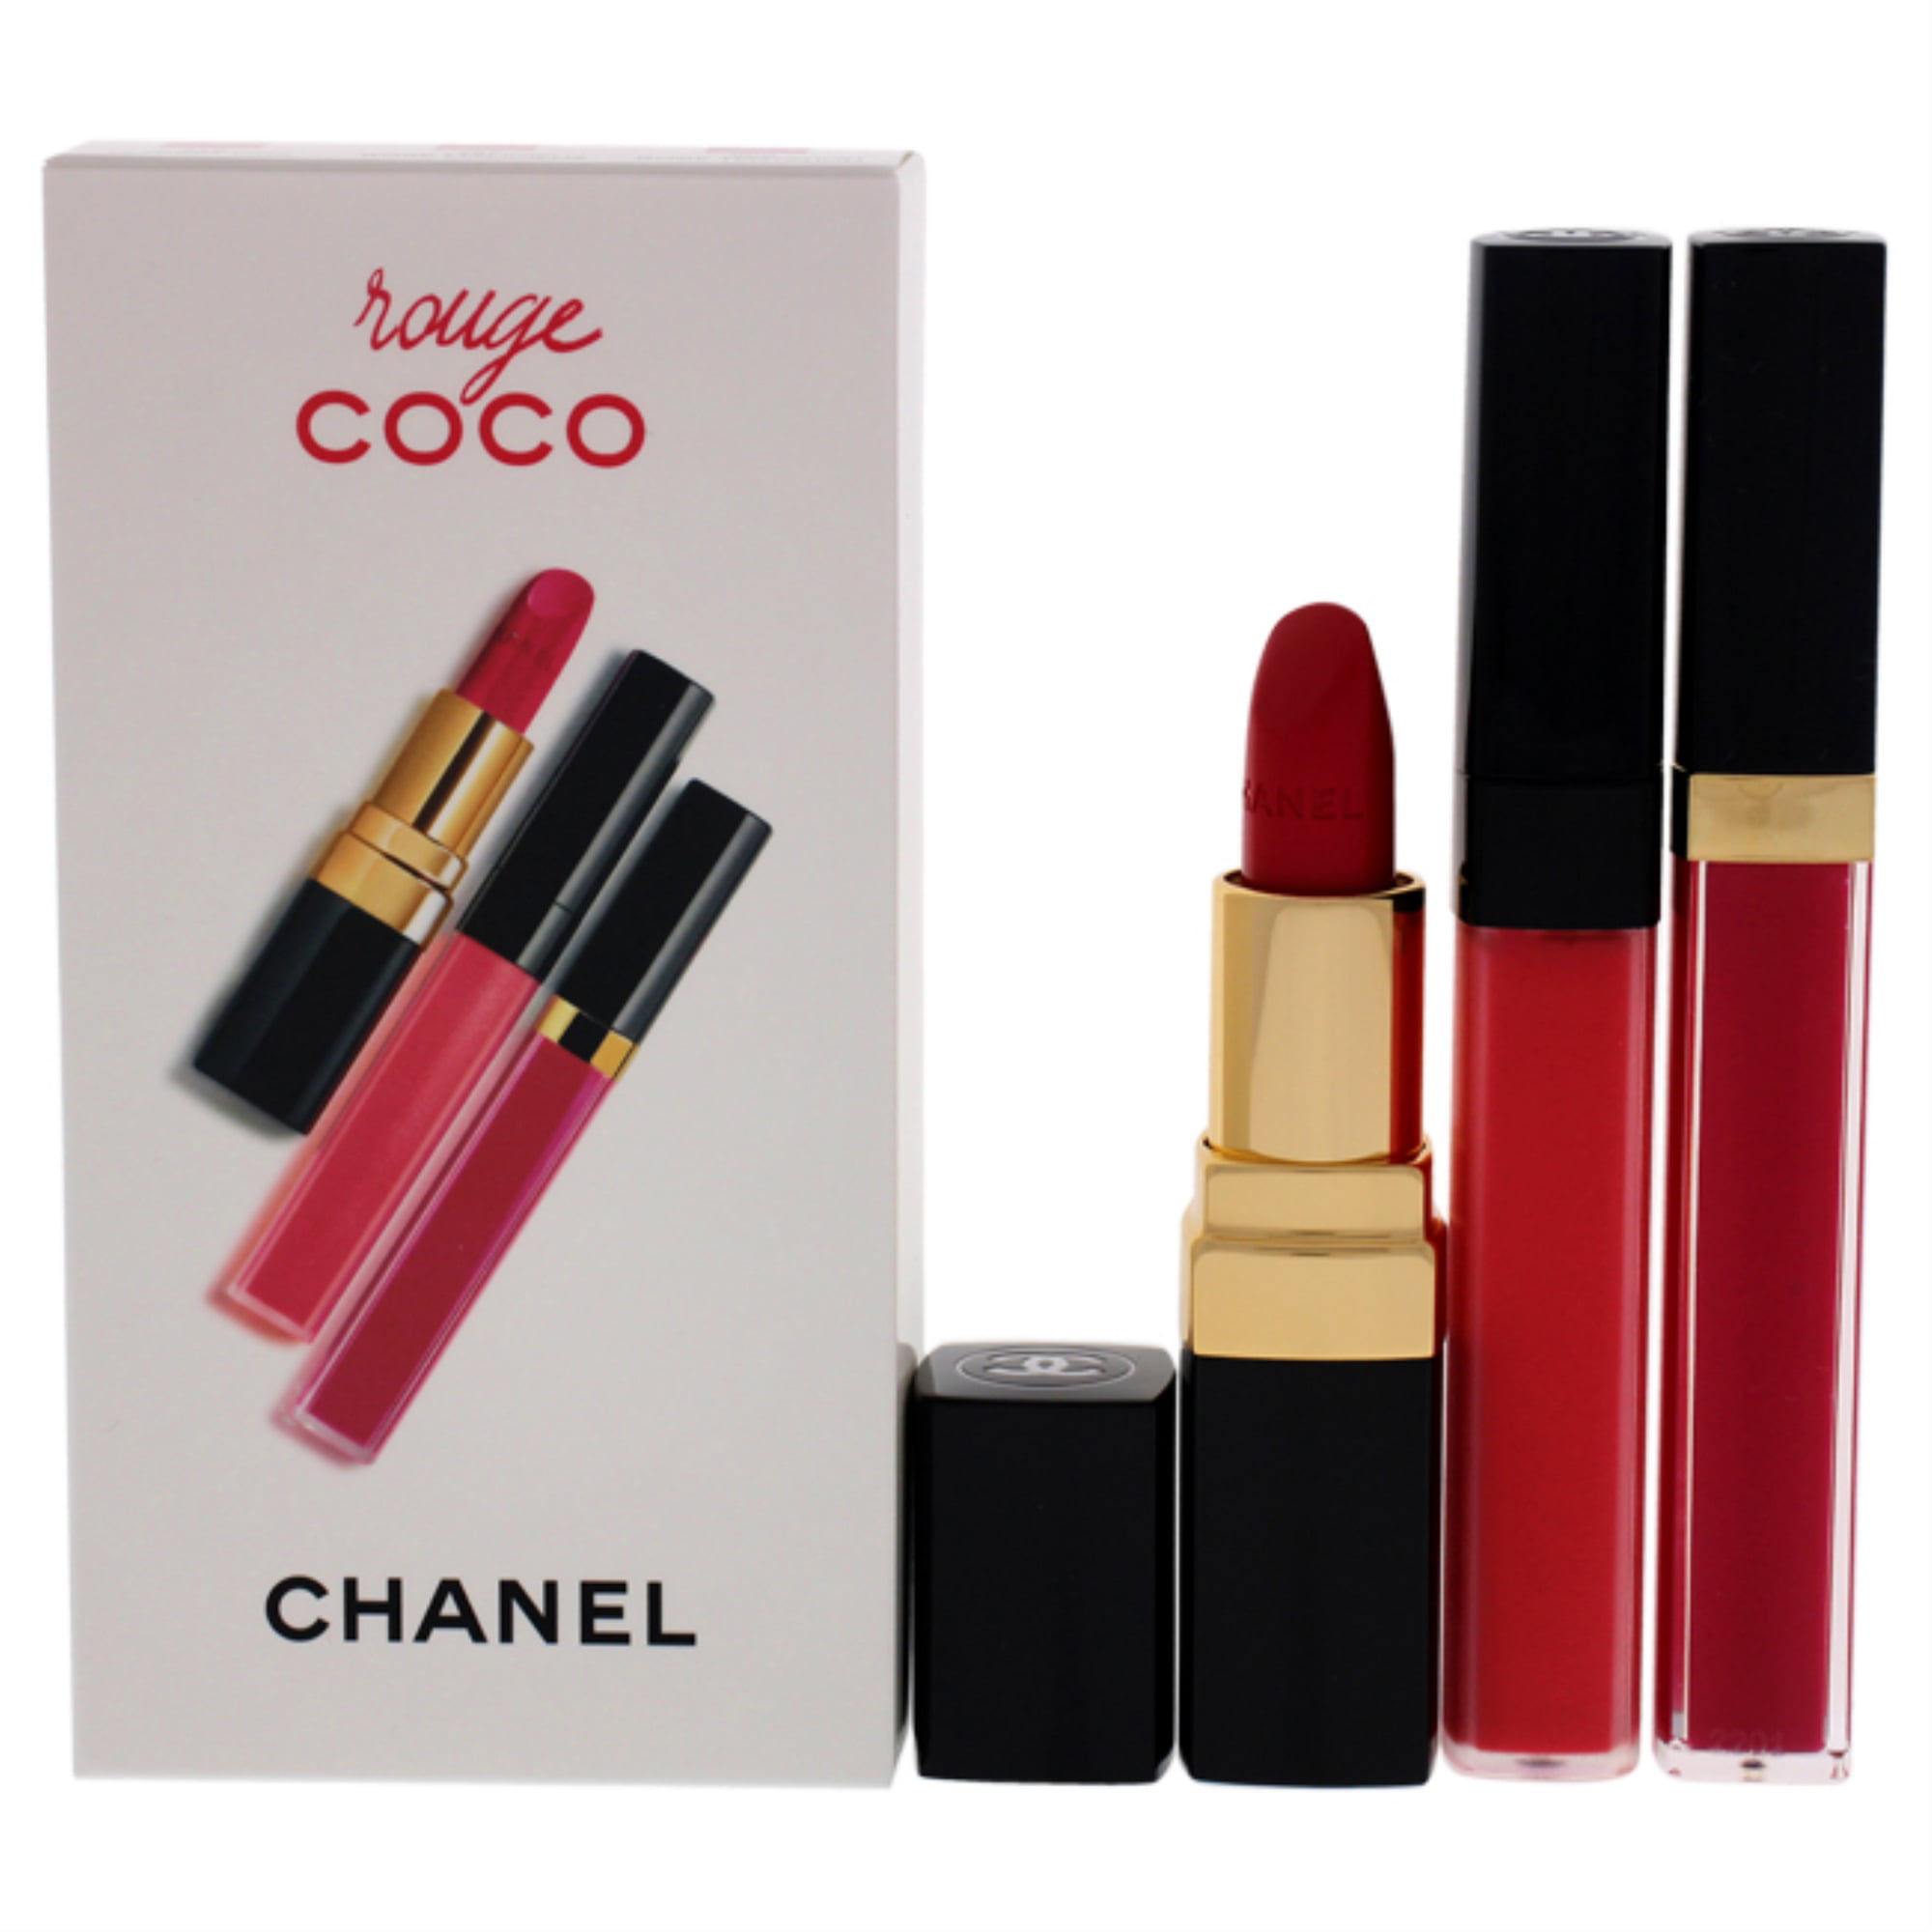 Rouge Coco Set by Chanel for Women - 3 Pc Set 0.19oz Lip Blush - 416  Teasing Pink, 0.12oz Ultra Hydrating Lip Color - 482 Rose Malicieux, 0.19oz  Moisturizing Lip Gloss - 806 Rose Tentation 